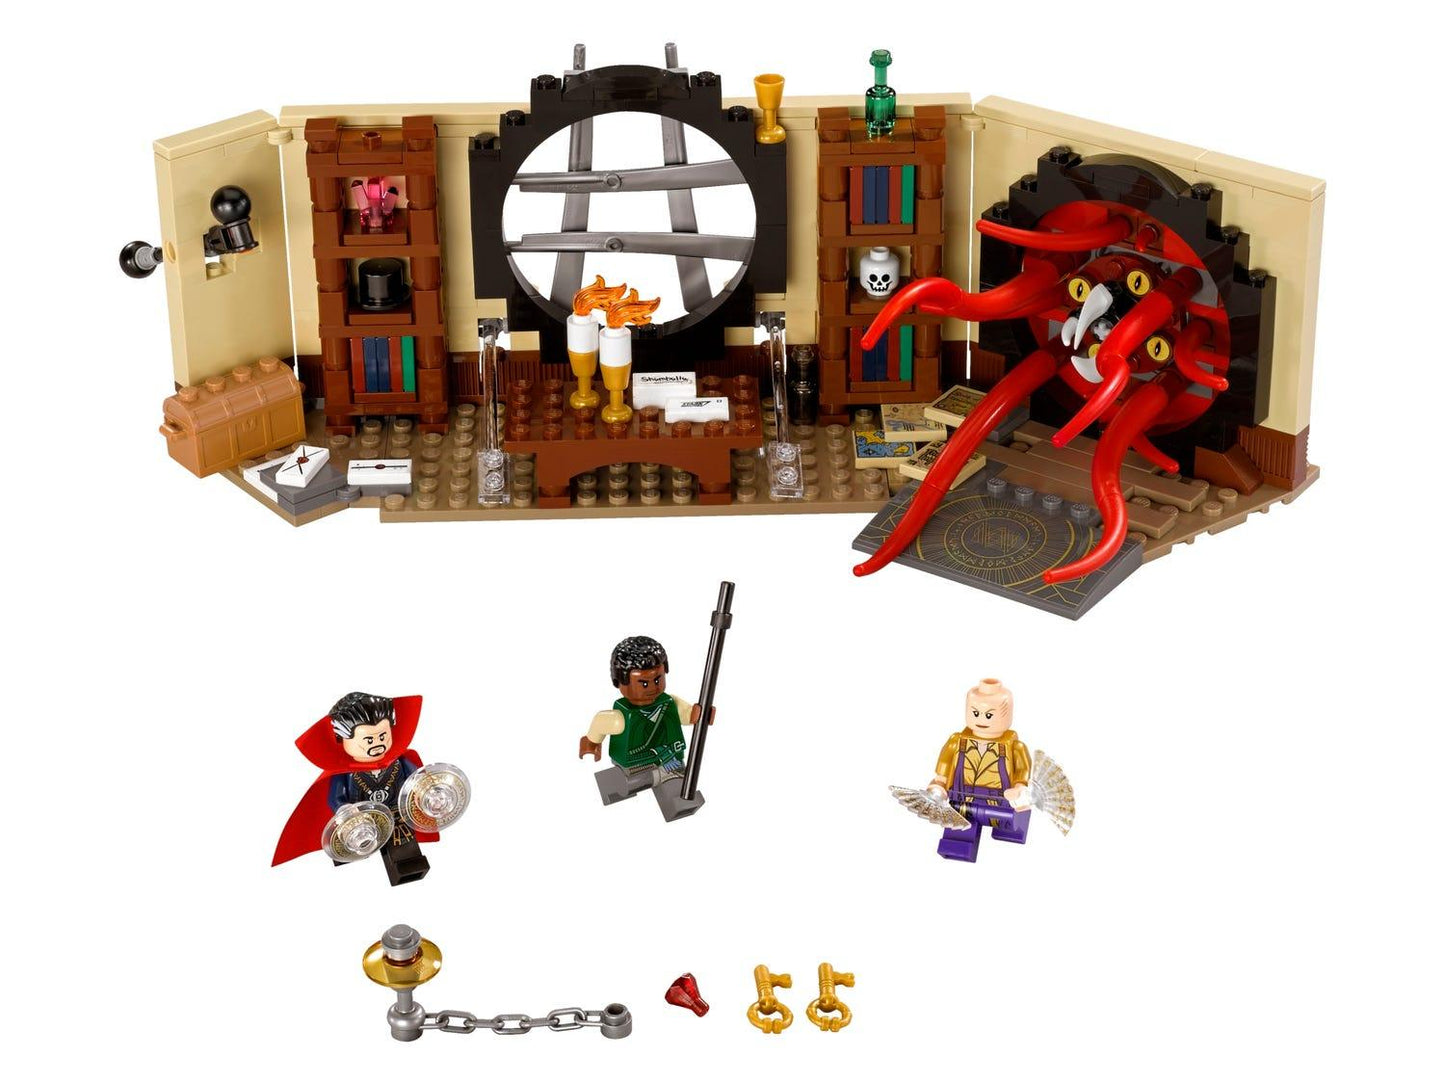 LEGO Doctor Strange's Sanctum Sanctorum 76060 Superheroes